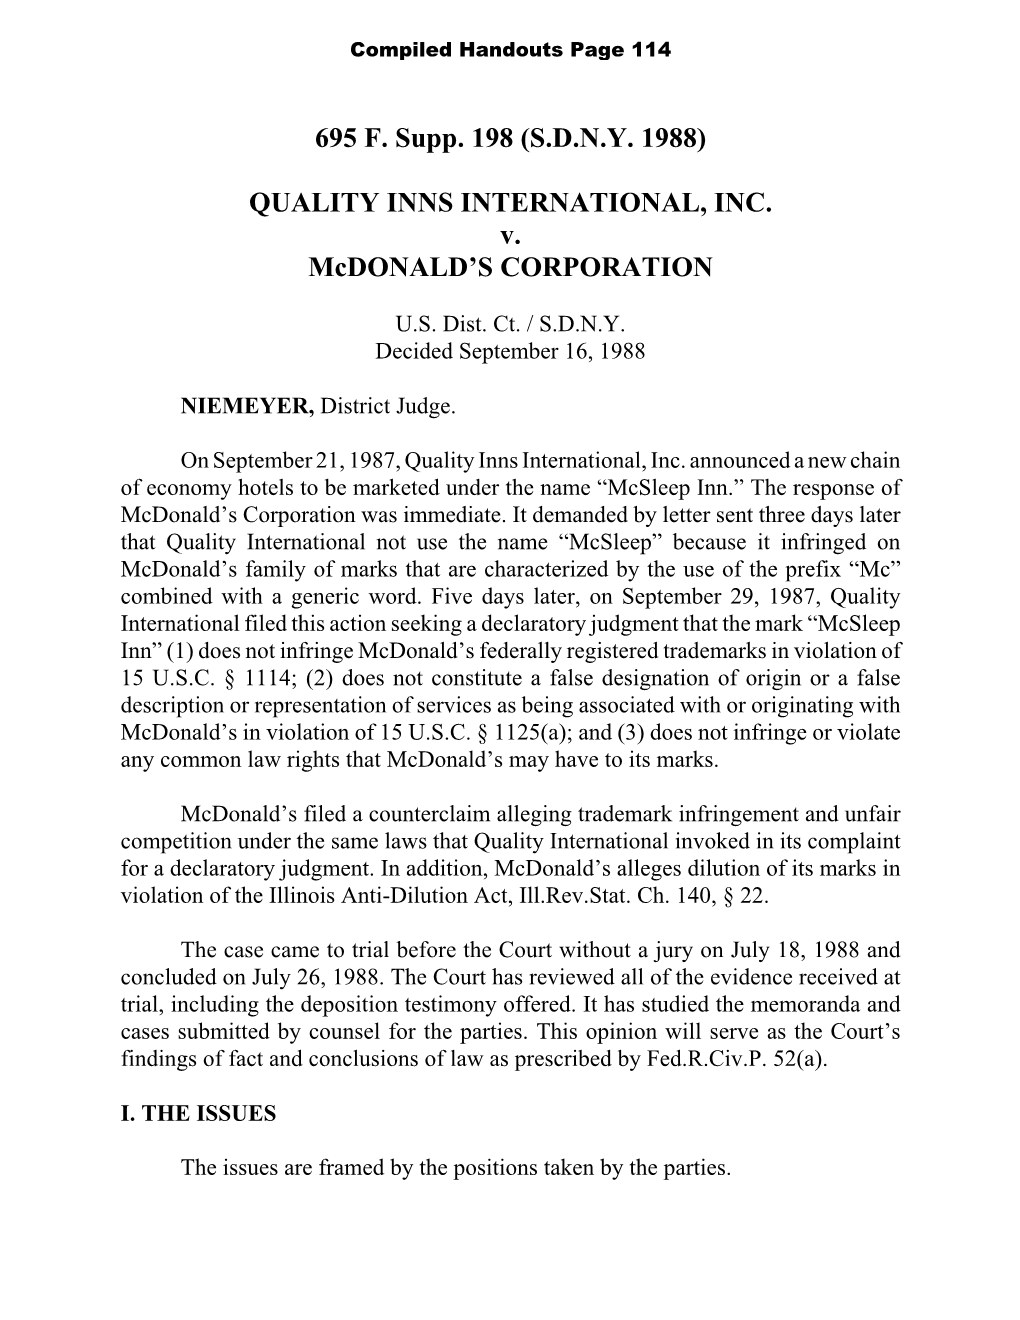 695 F. Supp. 198 (SDNY 1988) QUALITY INNS INTERNATIONAL, INC. V. Mcdonald's CORPORATION